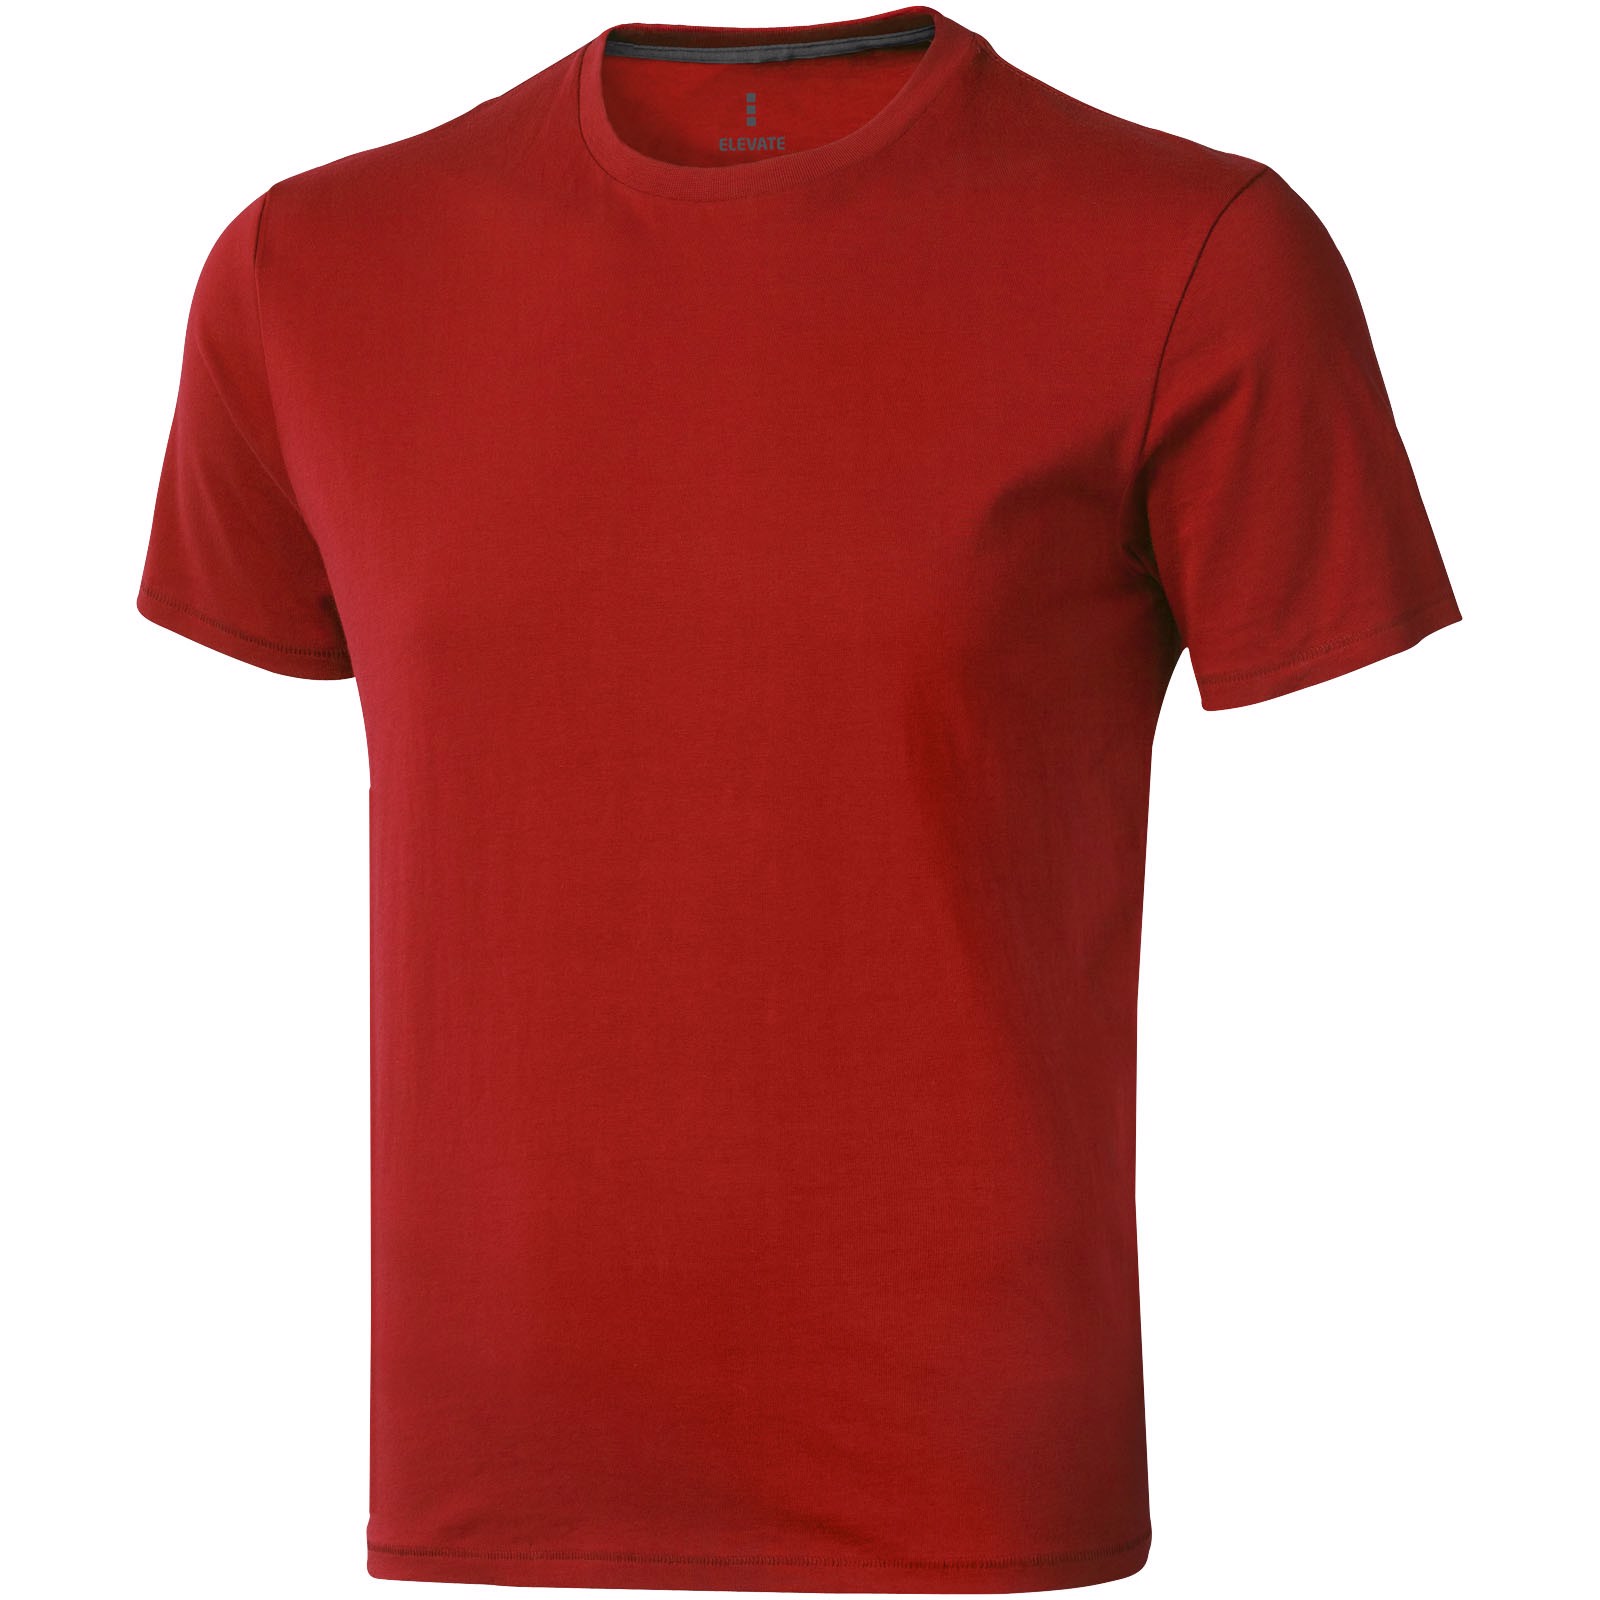 Camiseta de manga corta para hombre "Nanaimo" - Rojo / S